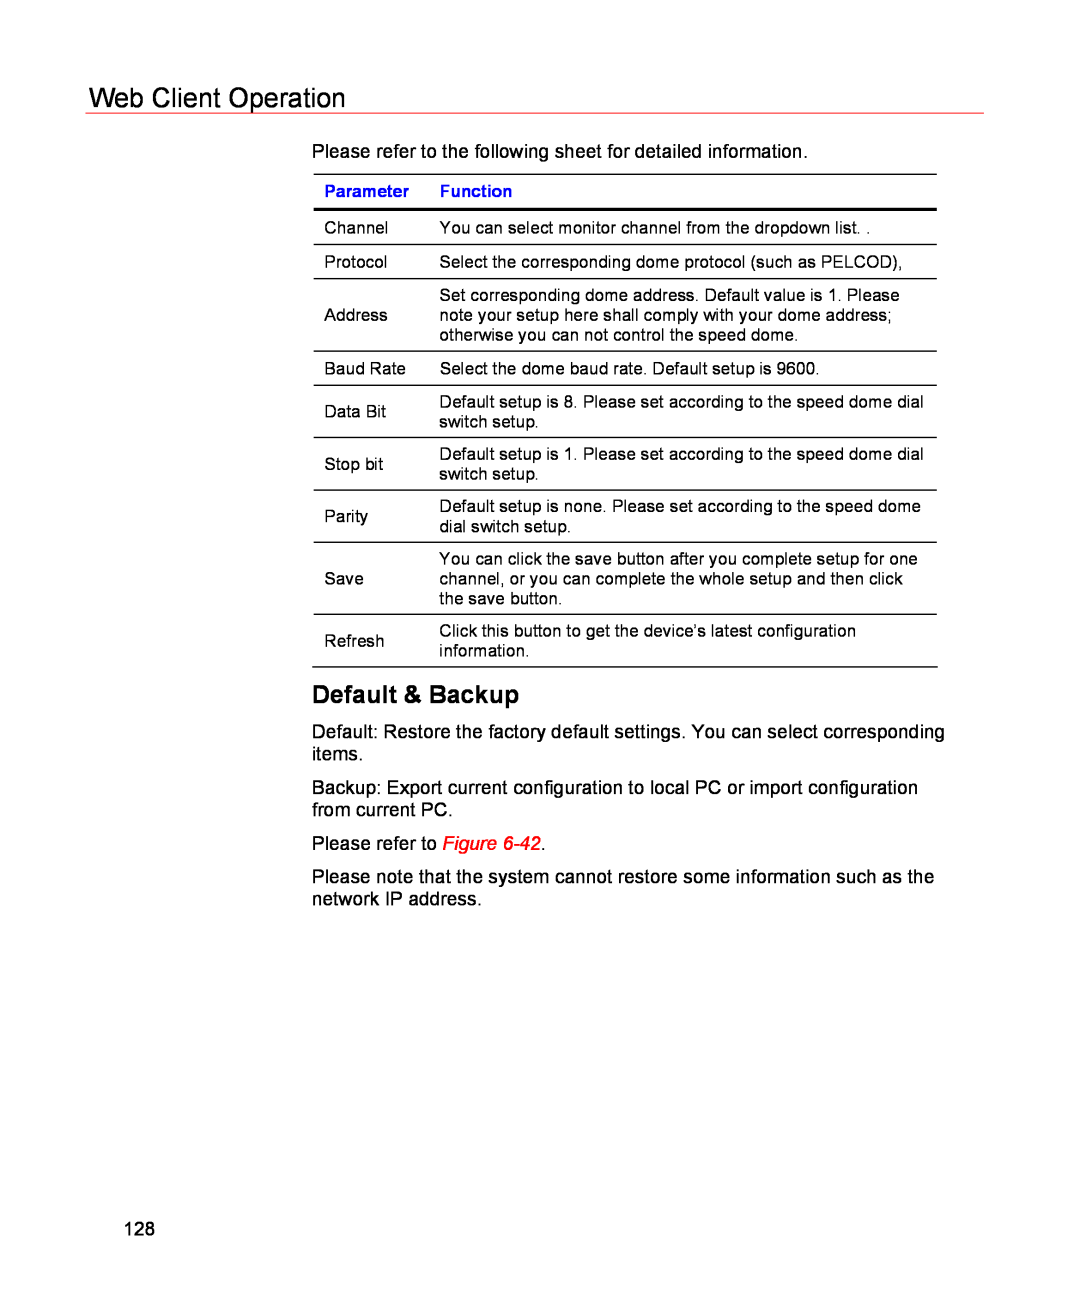 Honeywell HSVR-04, HSVR-16 user manual Default & Backup, Web Client Operation, Parameter, Function 